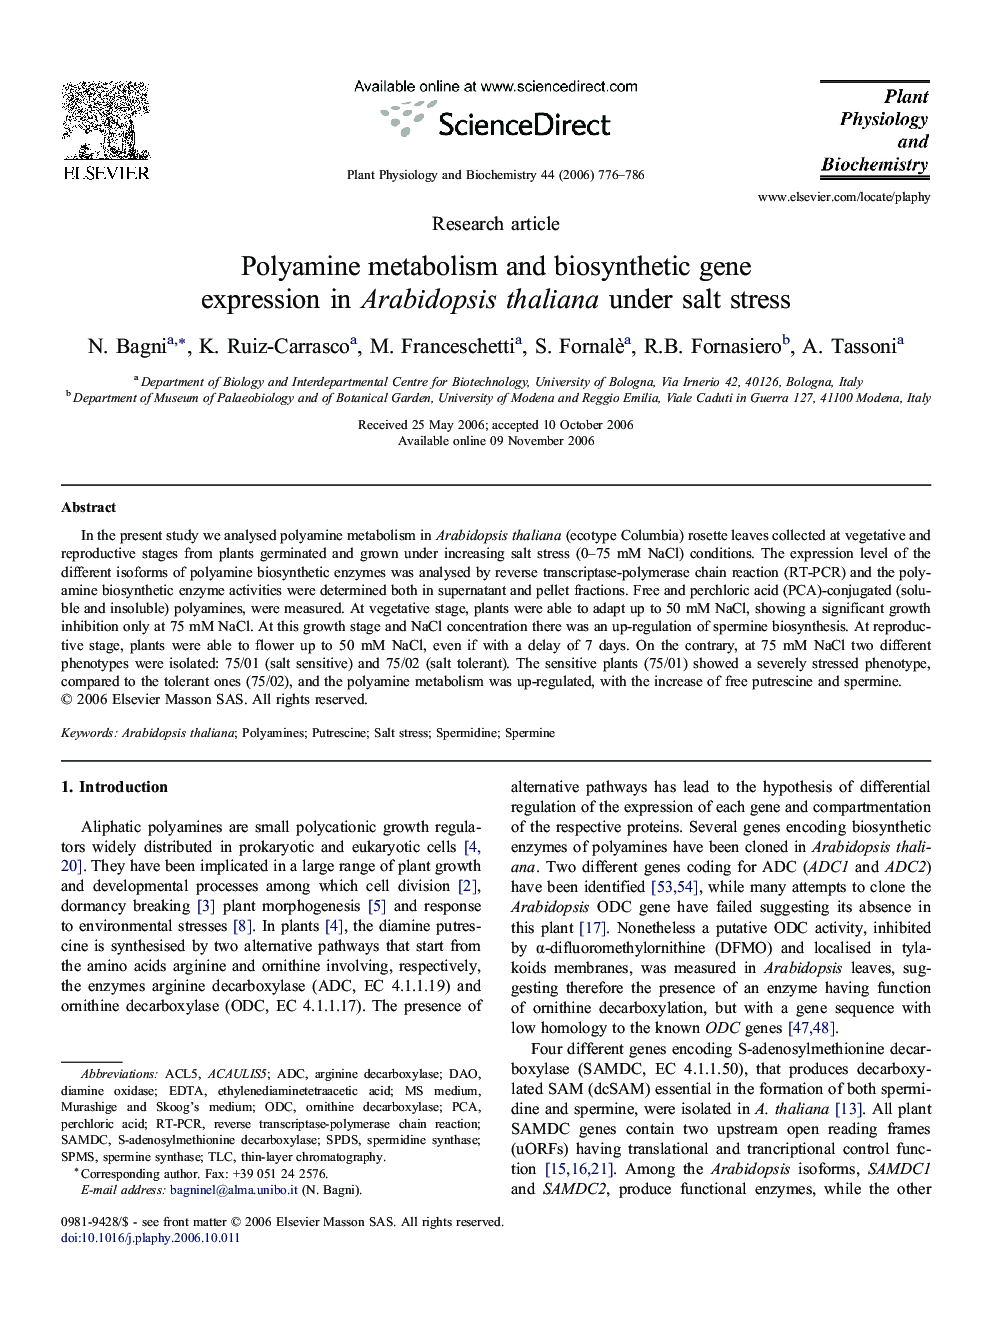 Polyamine metabolism and biosynthetic gene expression in Arabidopsis thaliana under salt stress